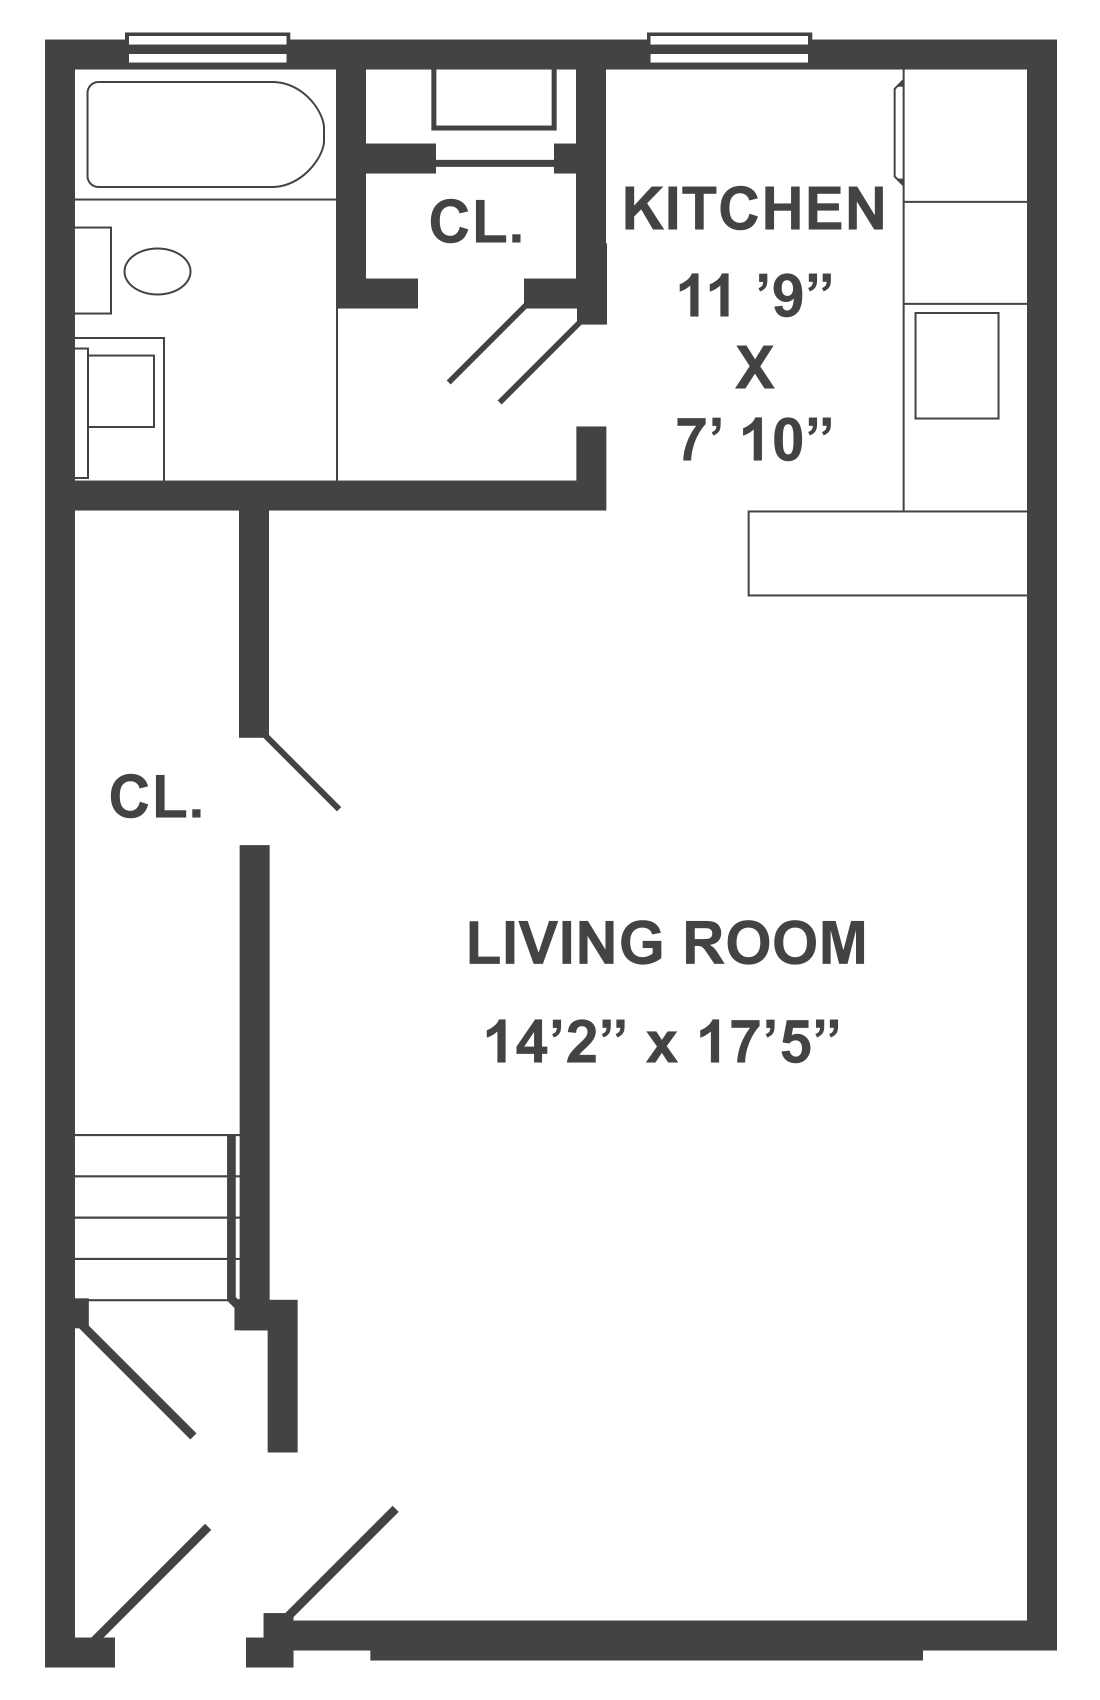 Studio Apartment Floorplan